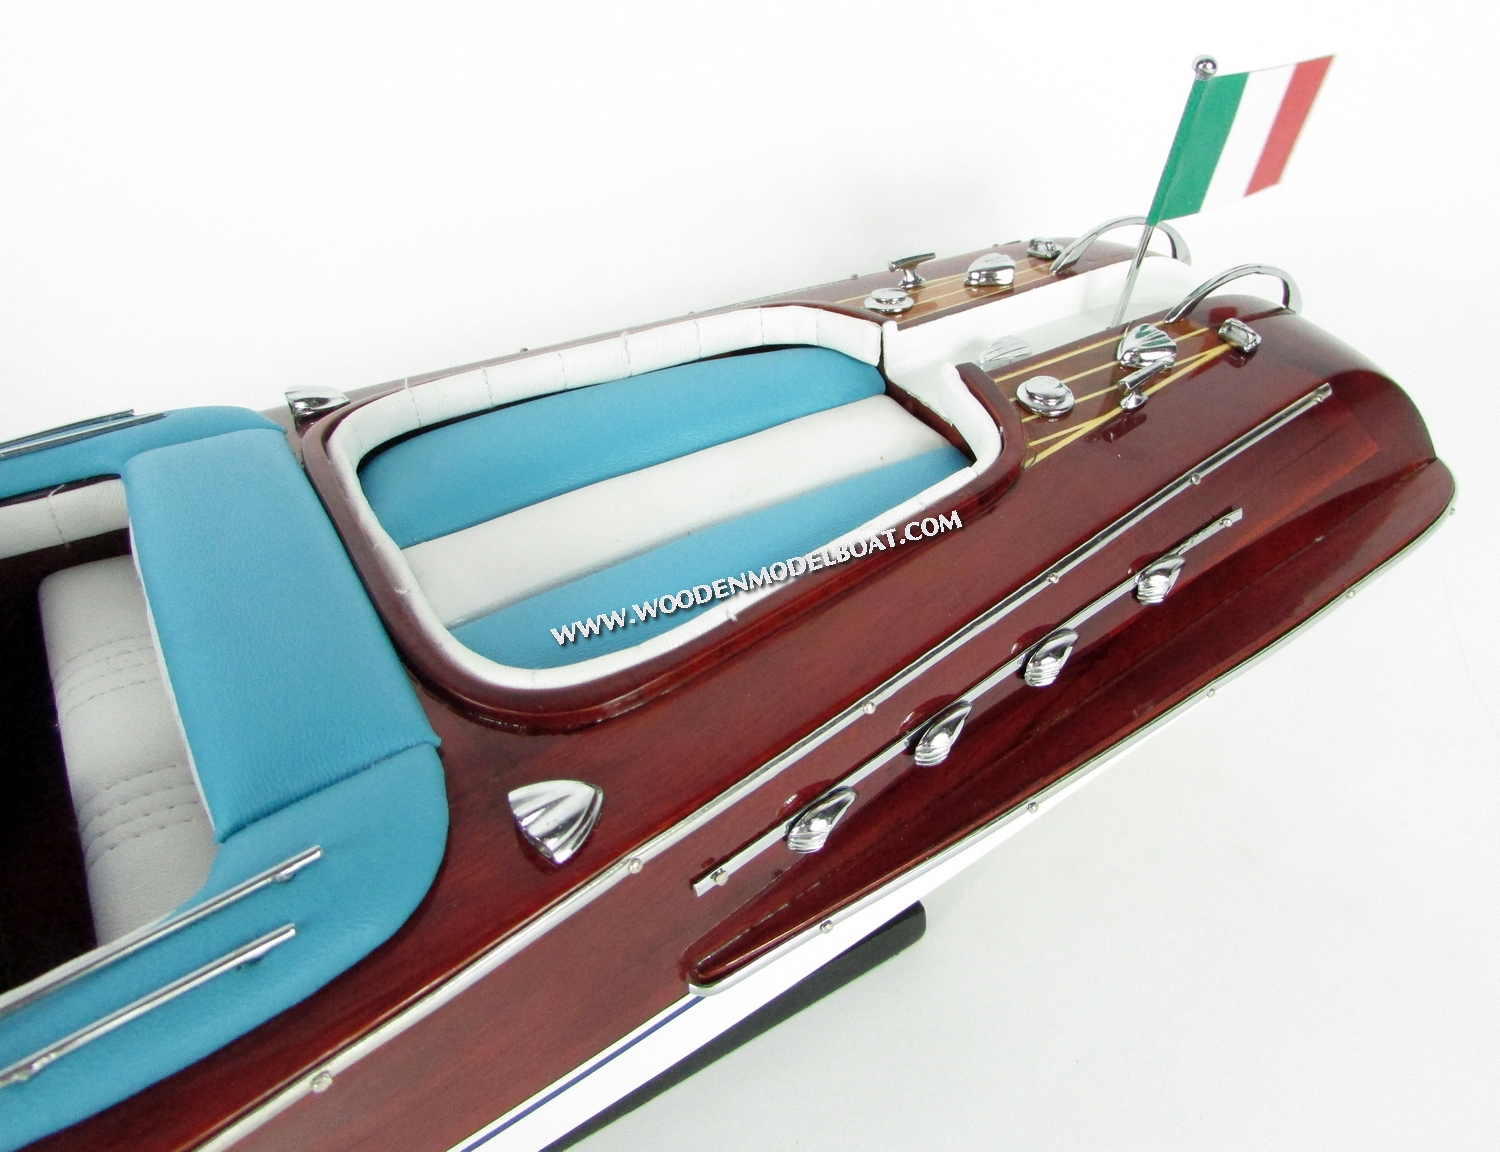 Riva Aquarama model boat